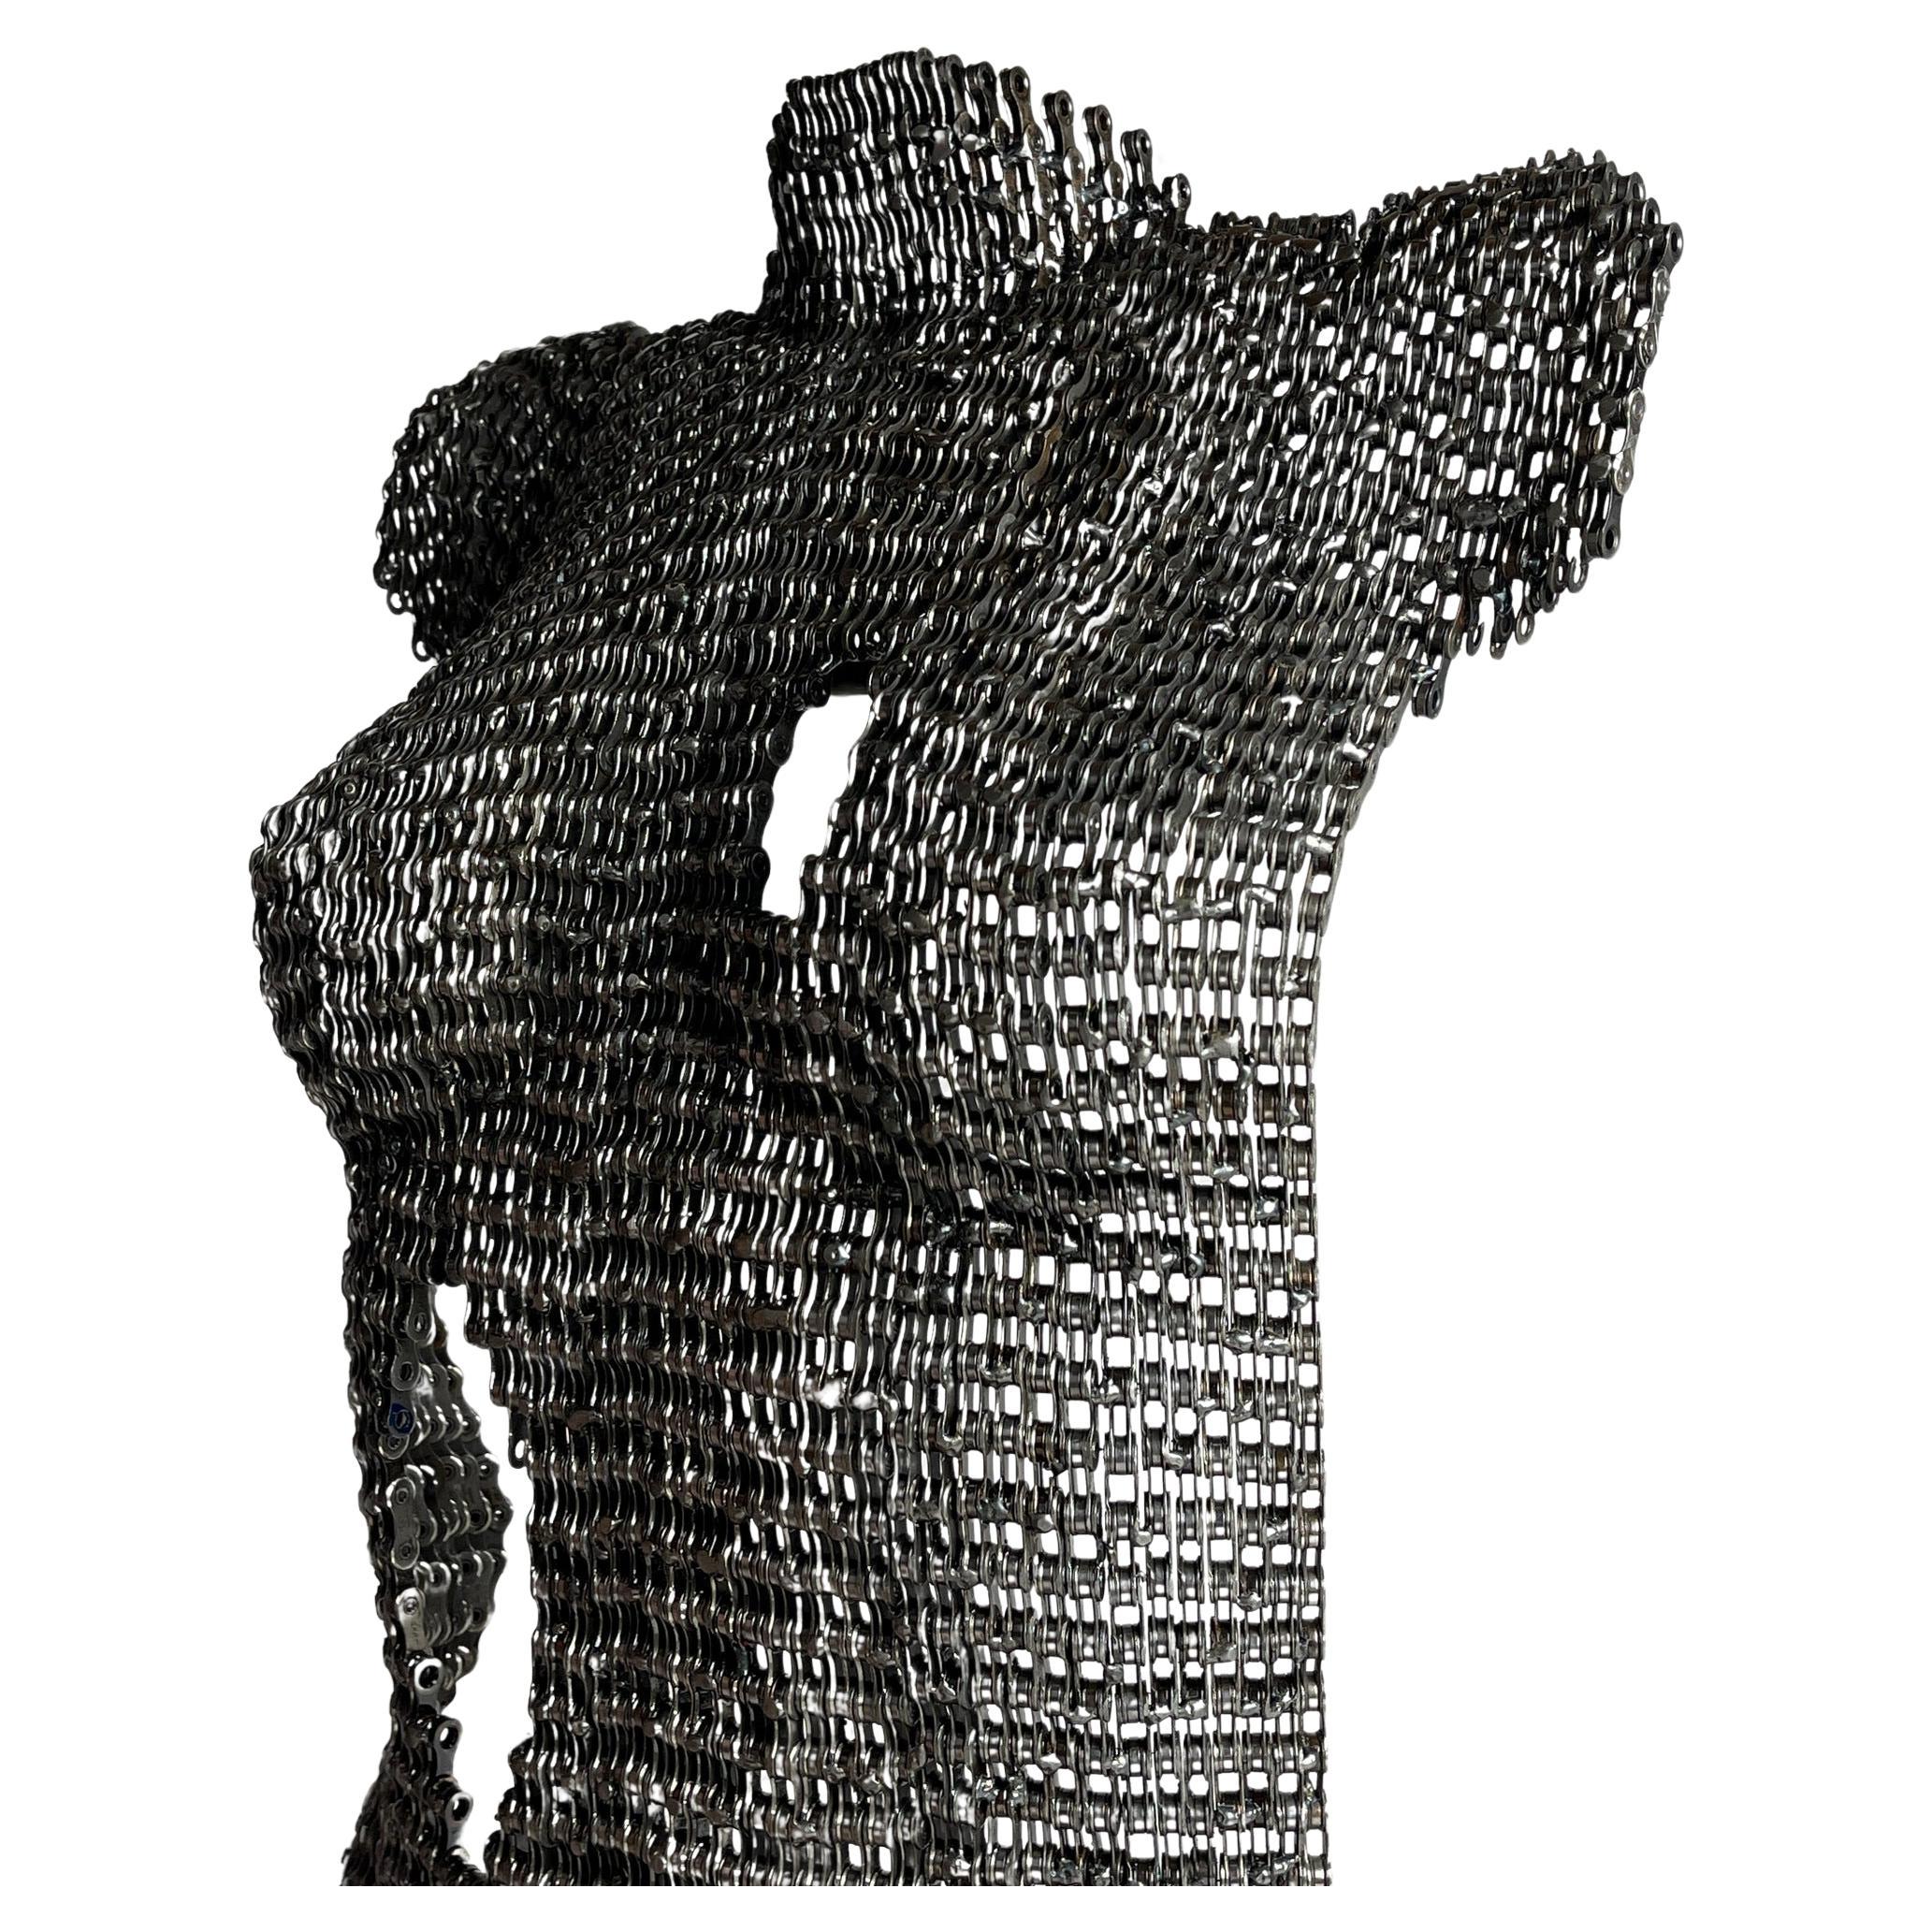 Elegance Forged in Metal: The One-of-a-Kind Sculpture by Jaka Globočnik 